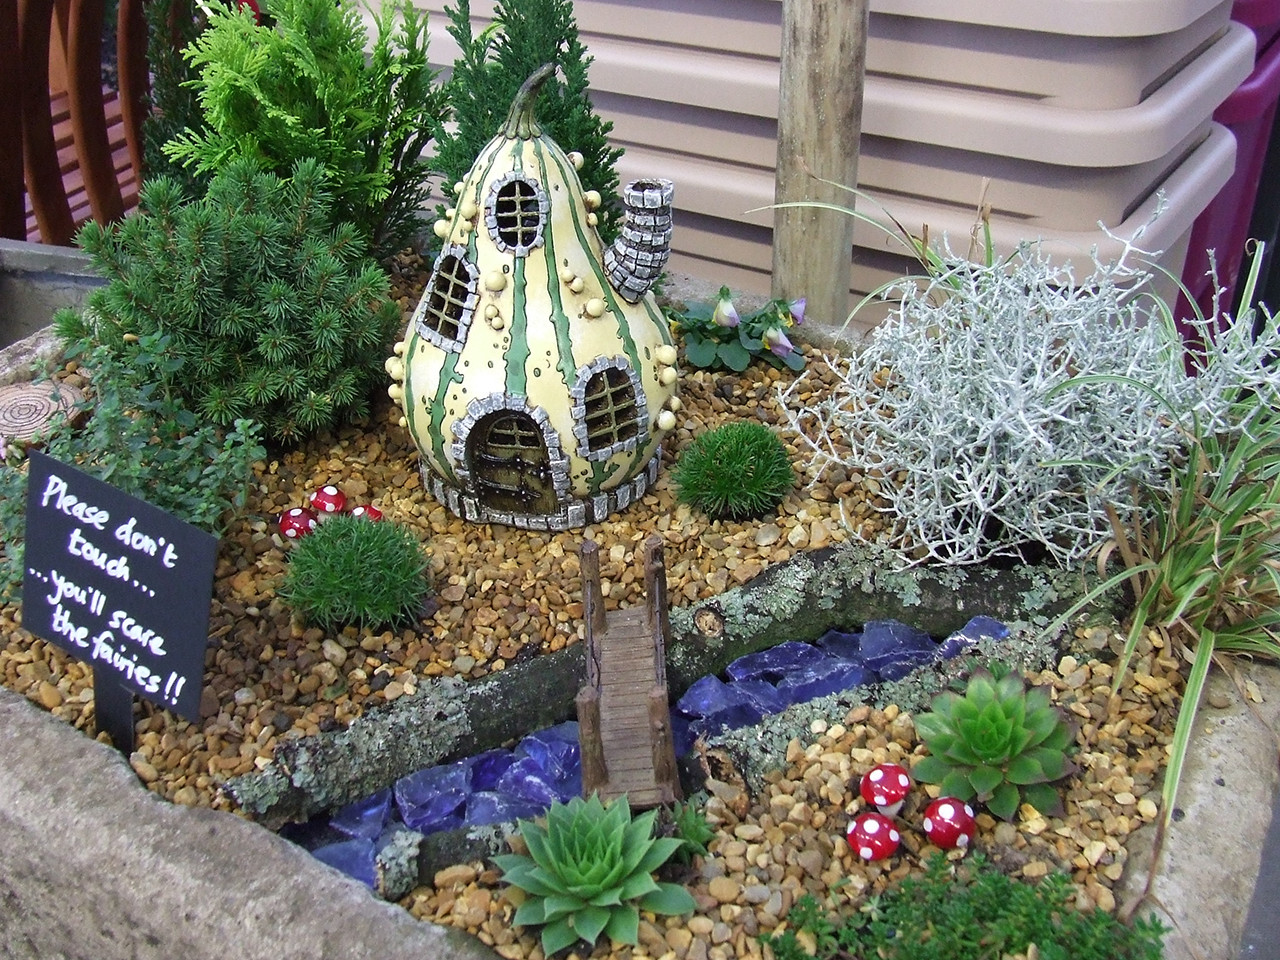 Best ideas about Miniature Fairy Garden Ideas Diy
. Save or Pin The 50 Best DIY Miniature Fairy Garden Ideas in 2019 Now.